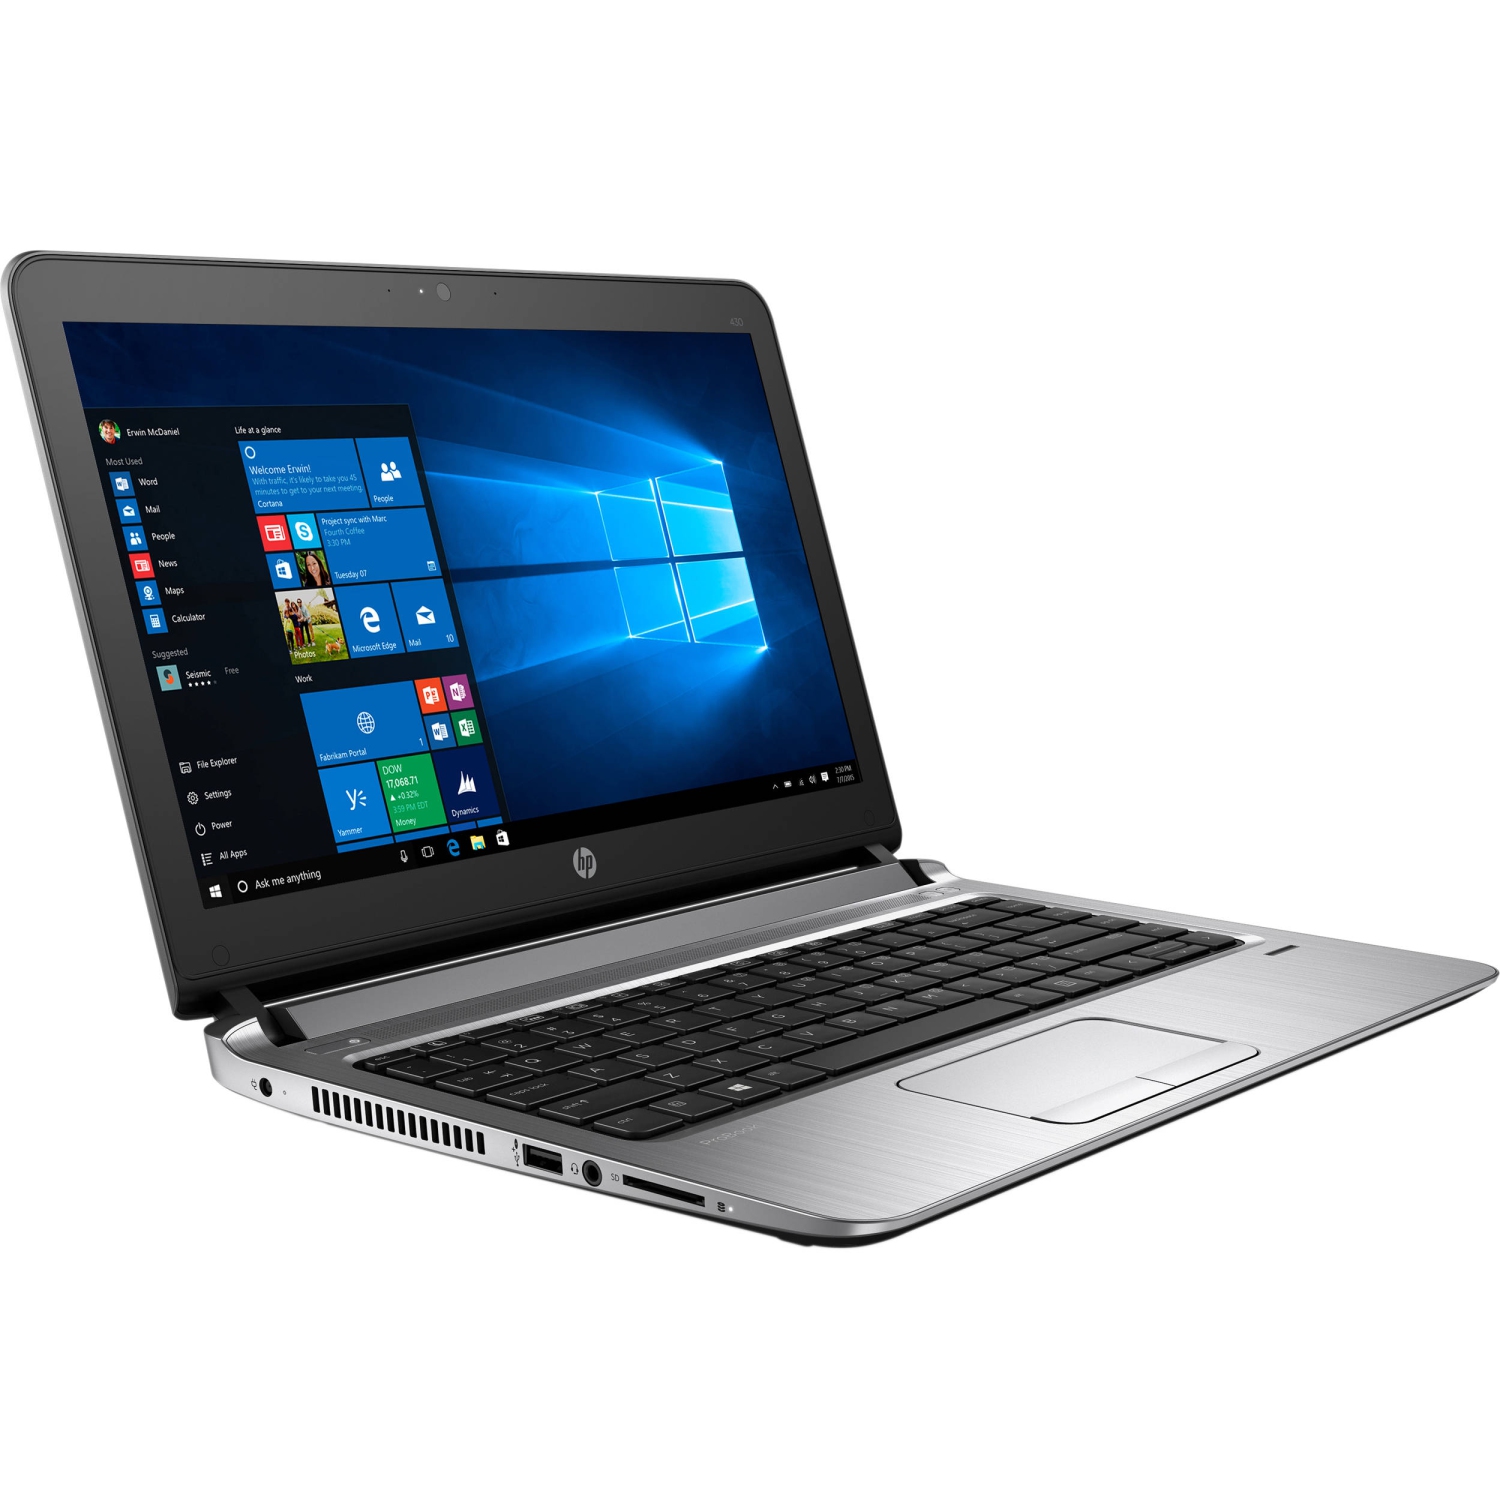 Refurbished (Good) - HP ProBook 430 G3 13" Touchscreen, Core i3-6100U, 4 GB DDR3, 128 GB SSD, Win 10 Home